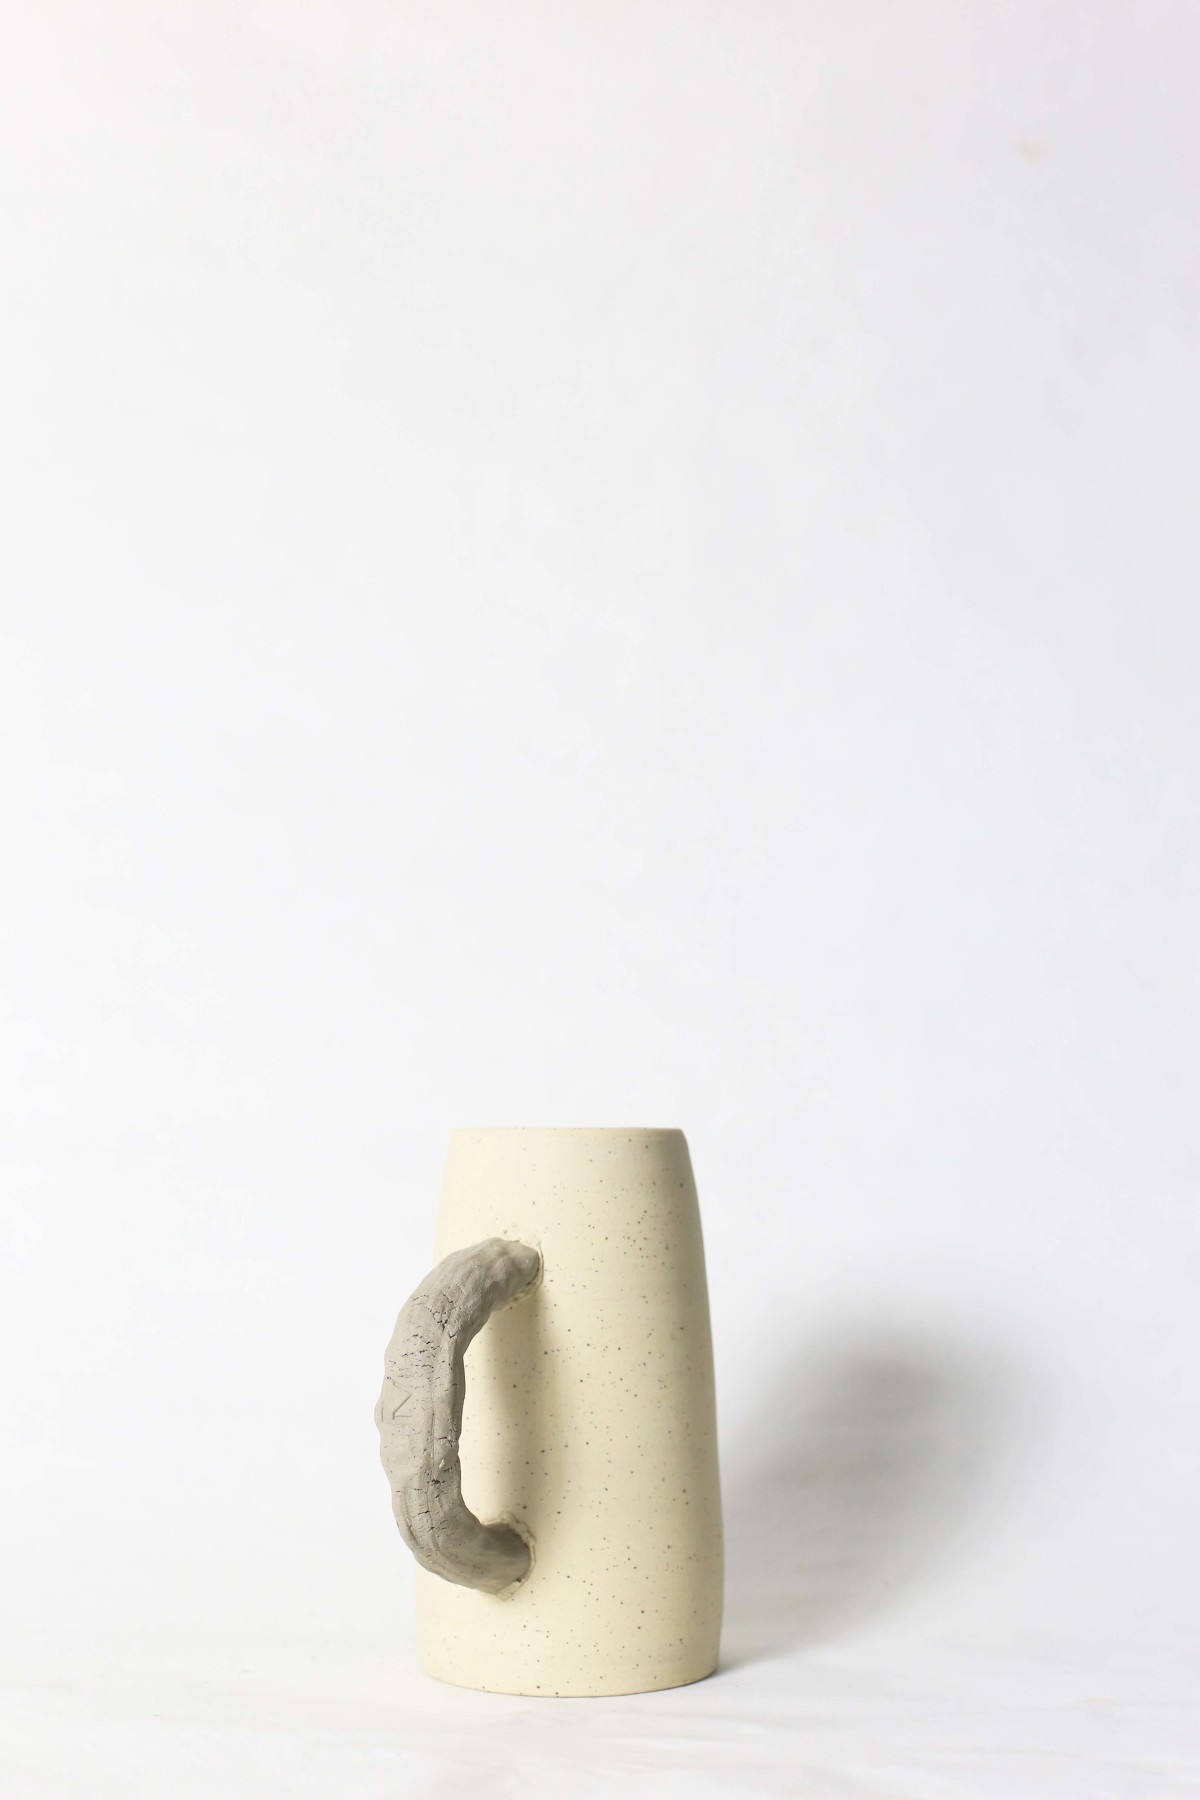 Beige ceramic jug on a white background handle forward